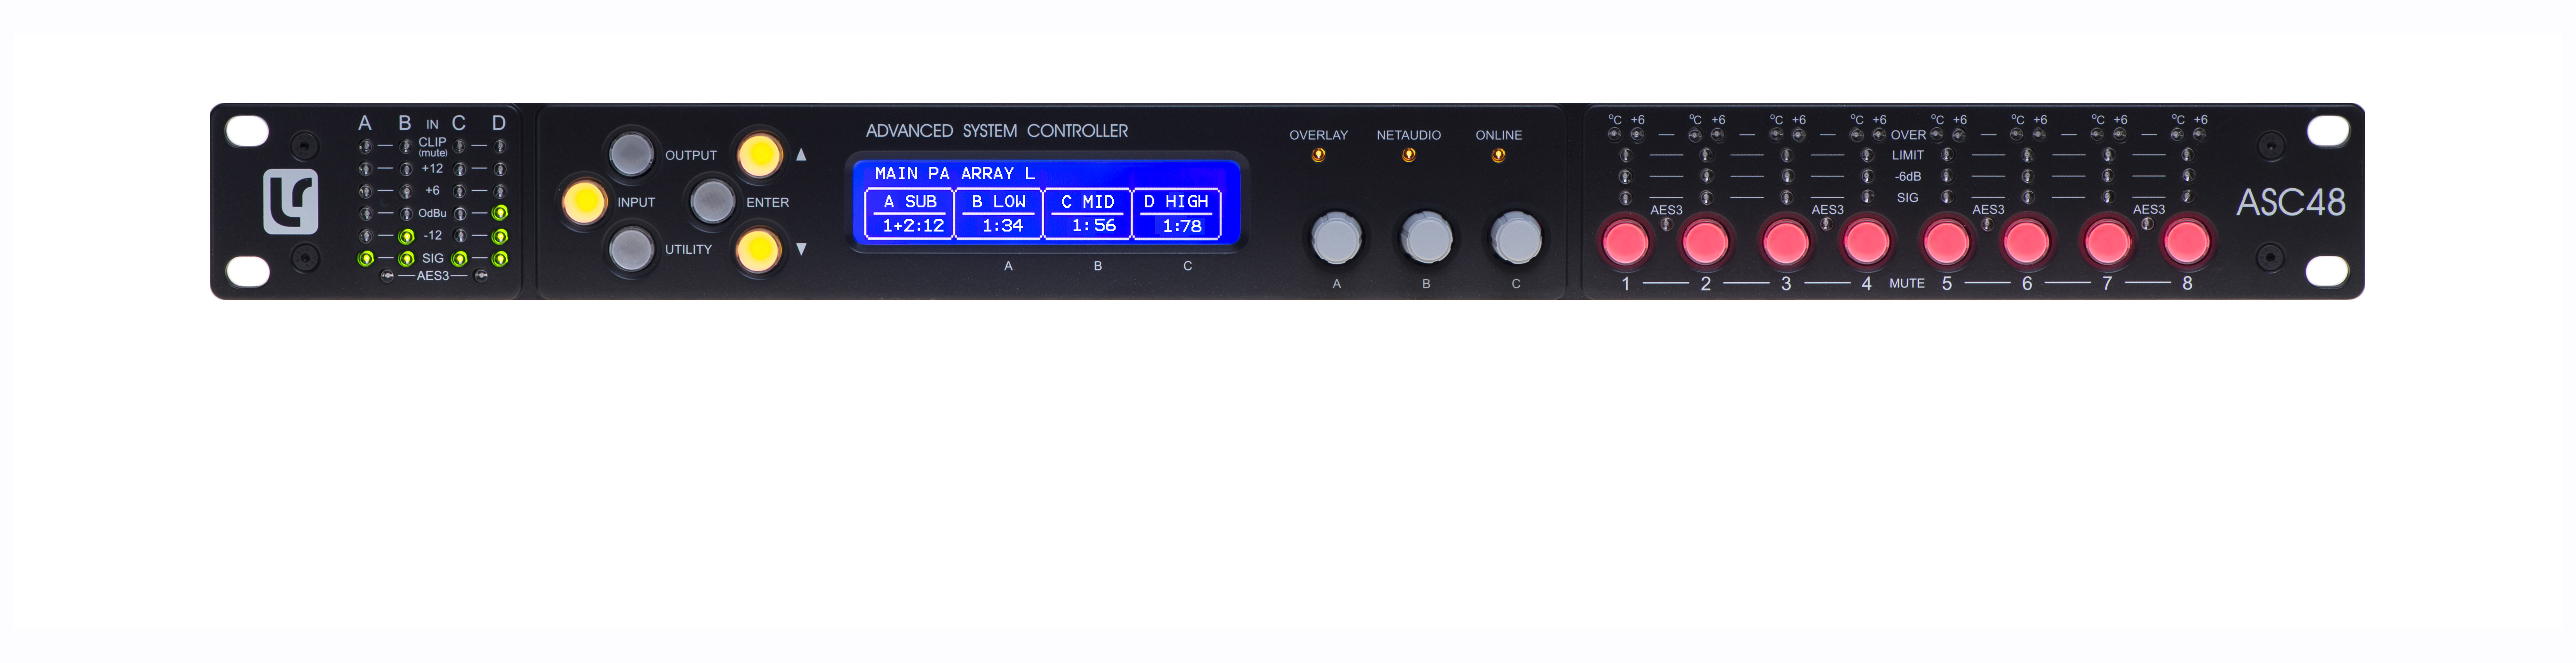 Linea Research ASC48 FIR Audio Controller